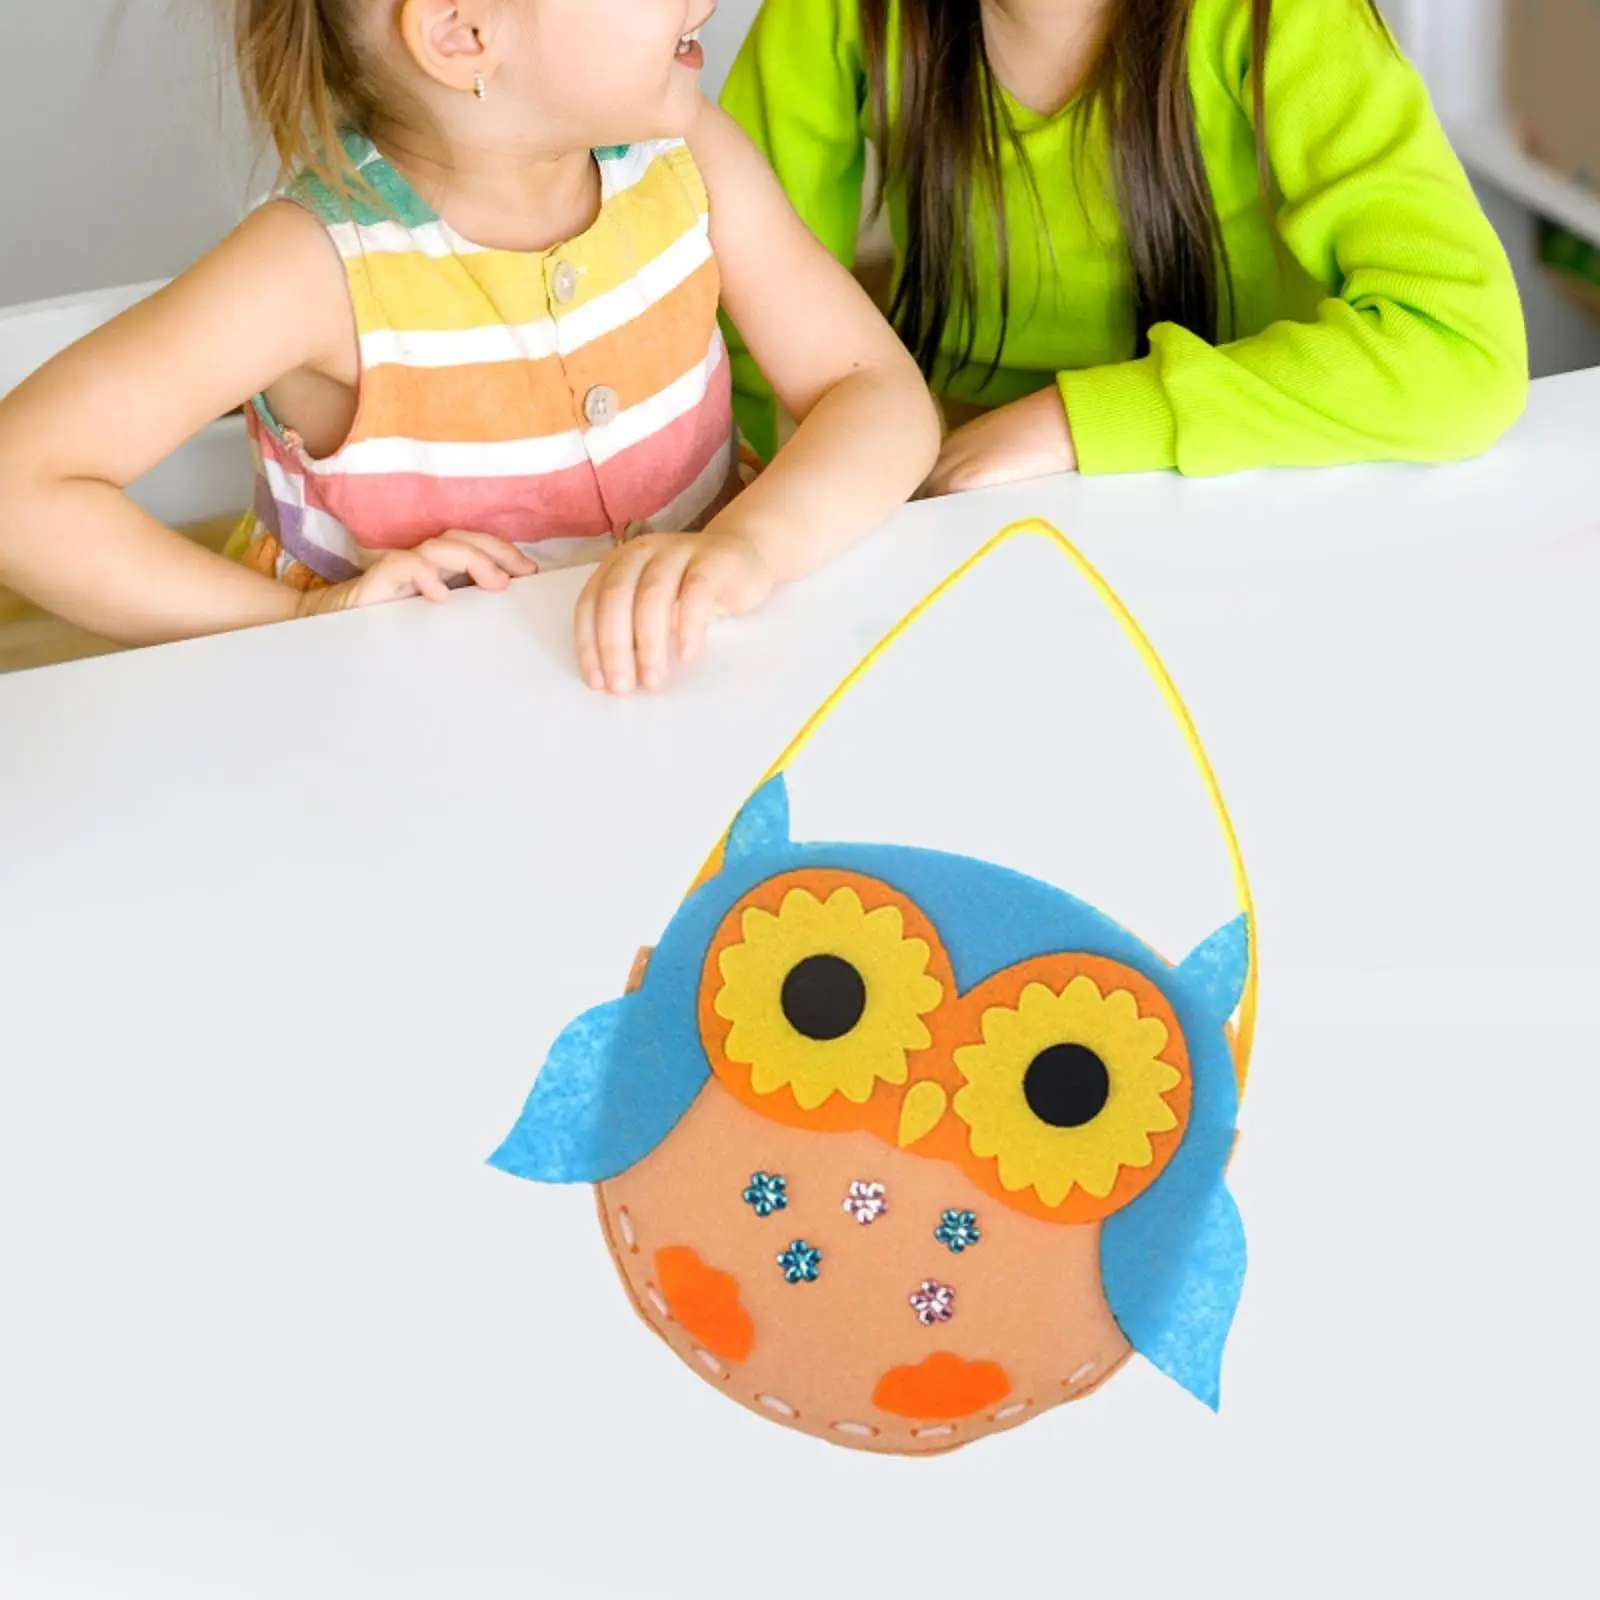 

DIY Sewing Handbag Kids Sewing Crafts Educational Toy Lovely Owl Shape Bag Making Material for Classroom Nursery Preschool